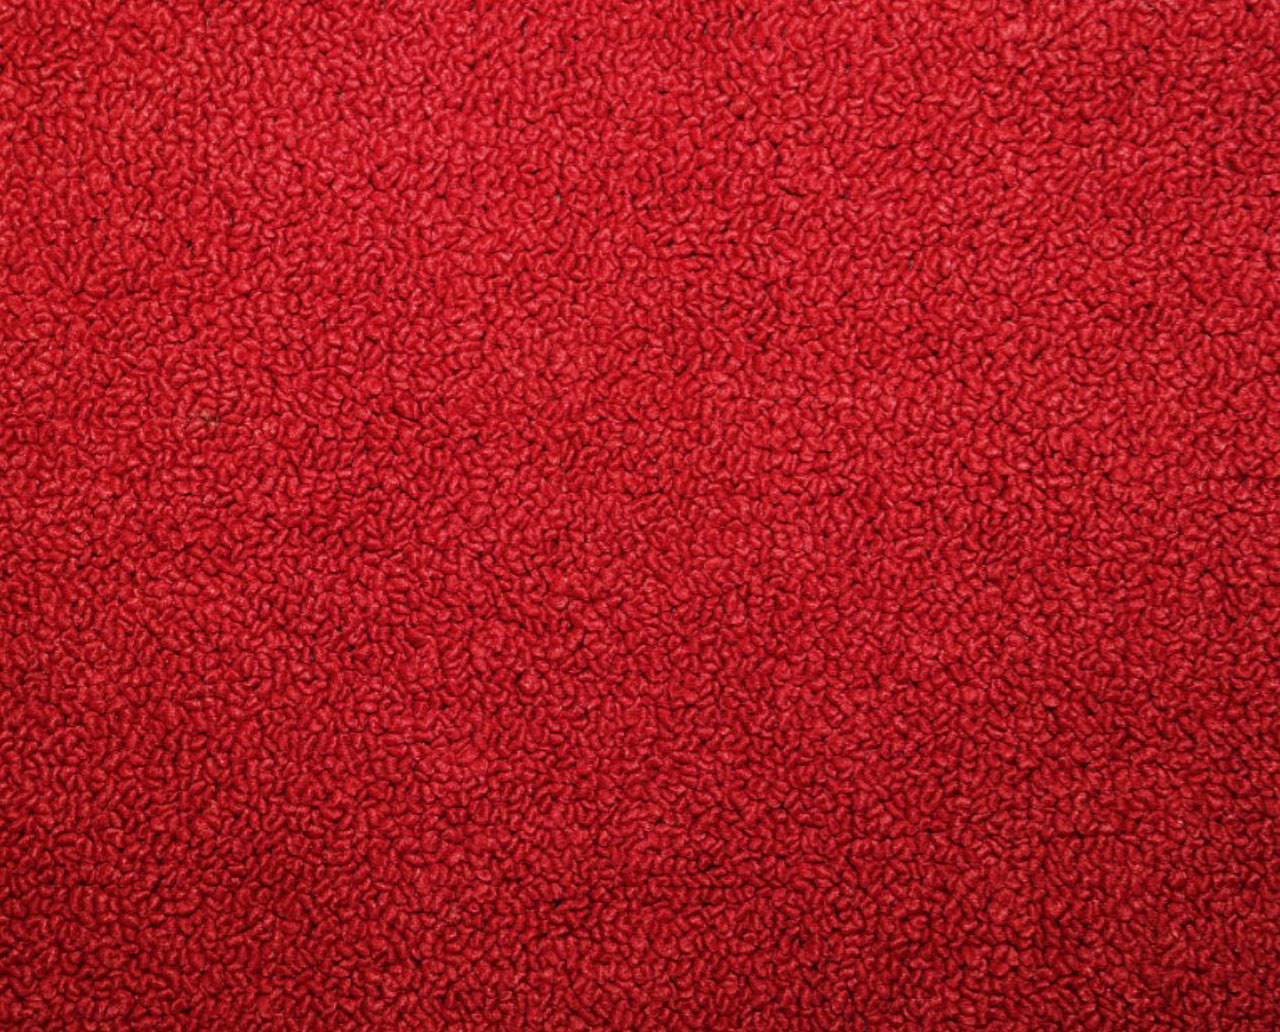 Holden Torana LC Torana S Sedan 42A Calypso Red Carpet (Image 1 of 1)